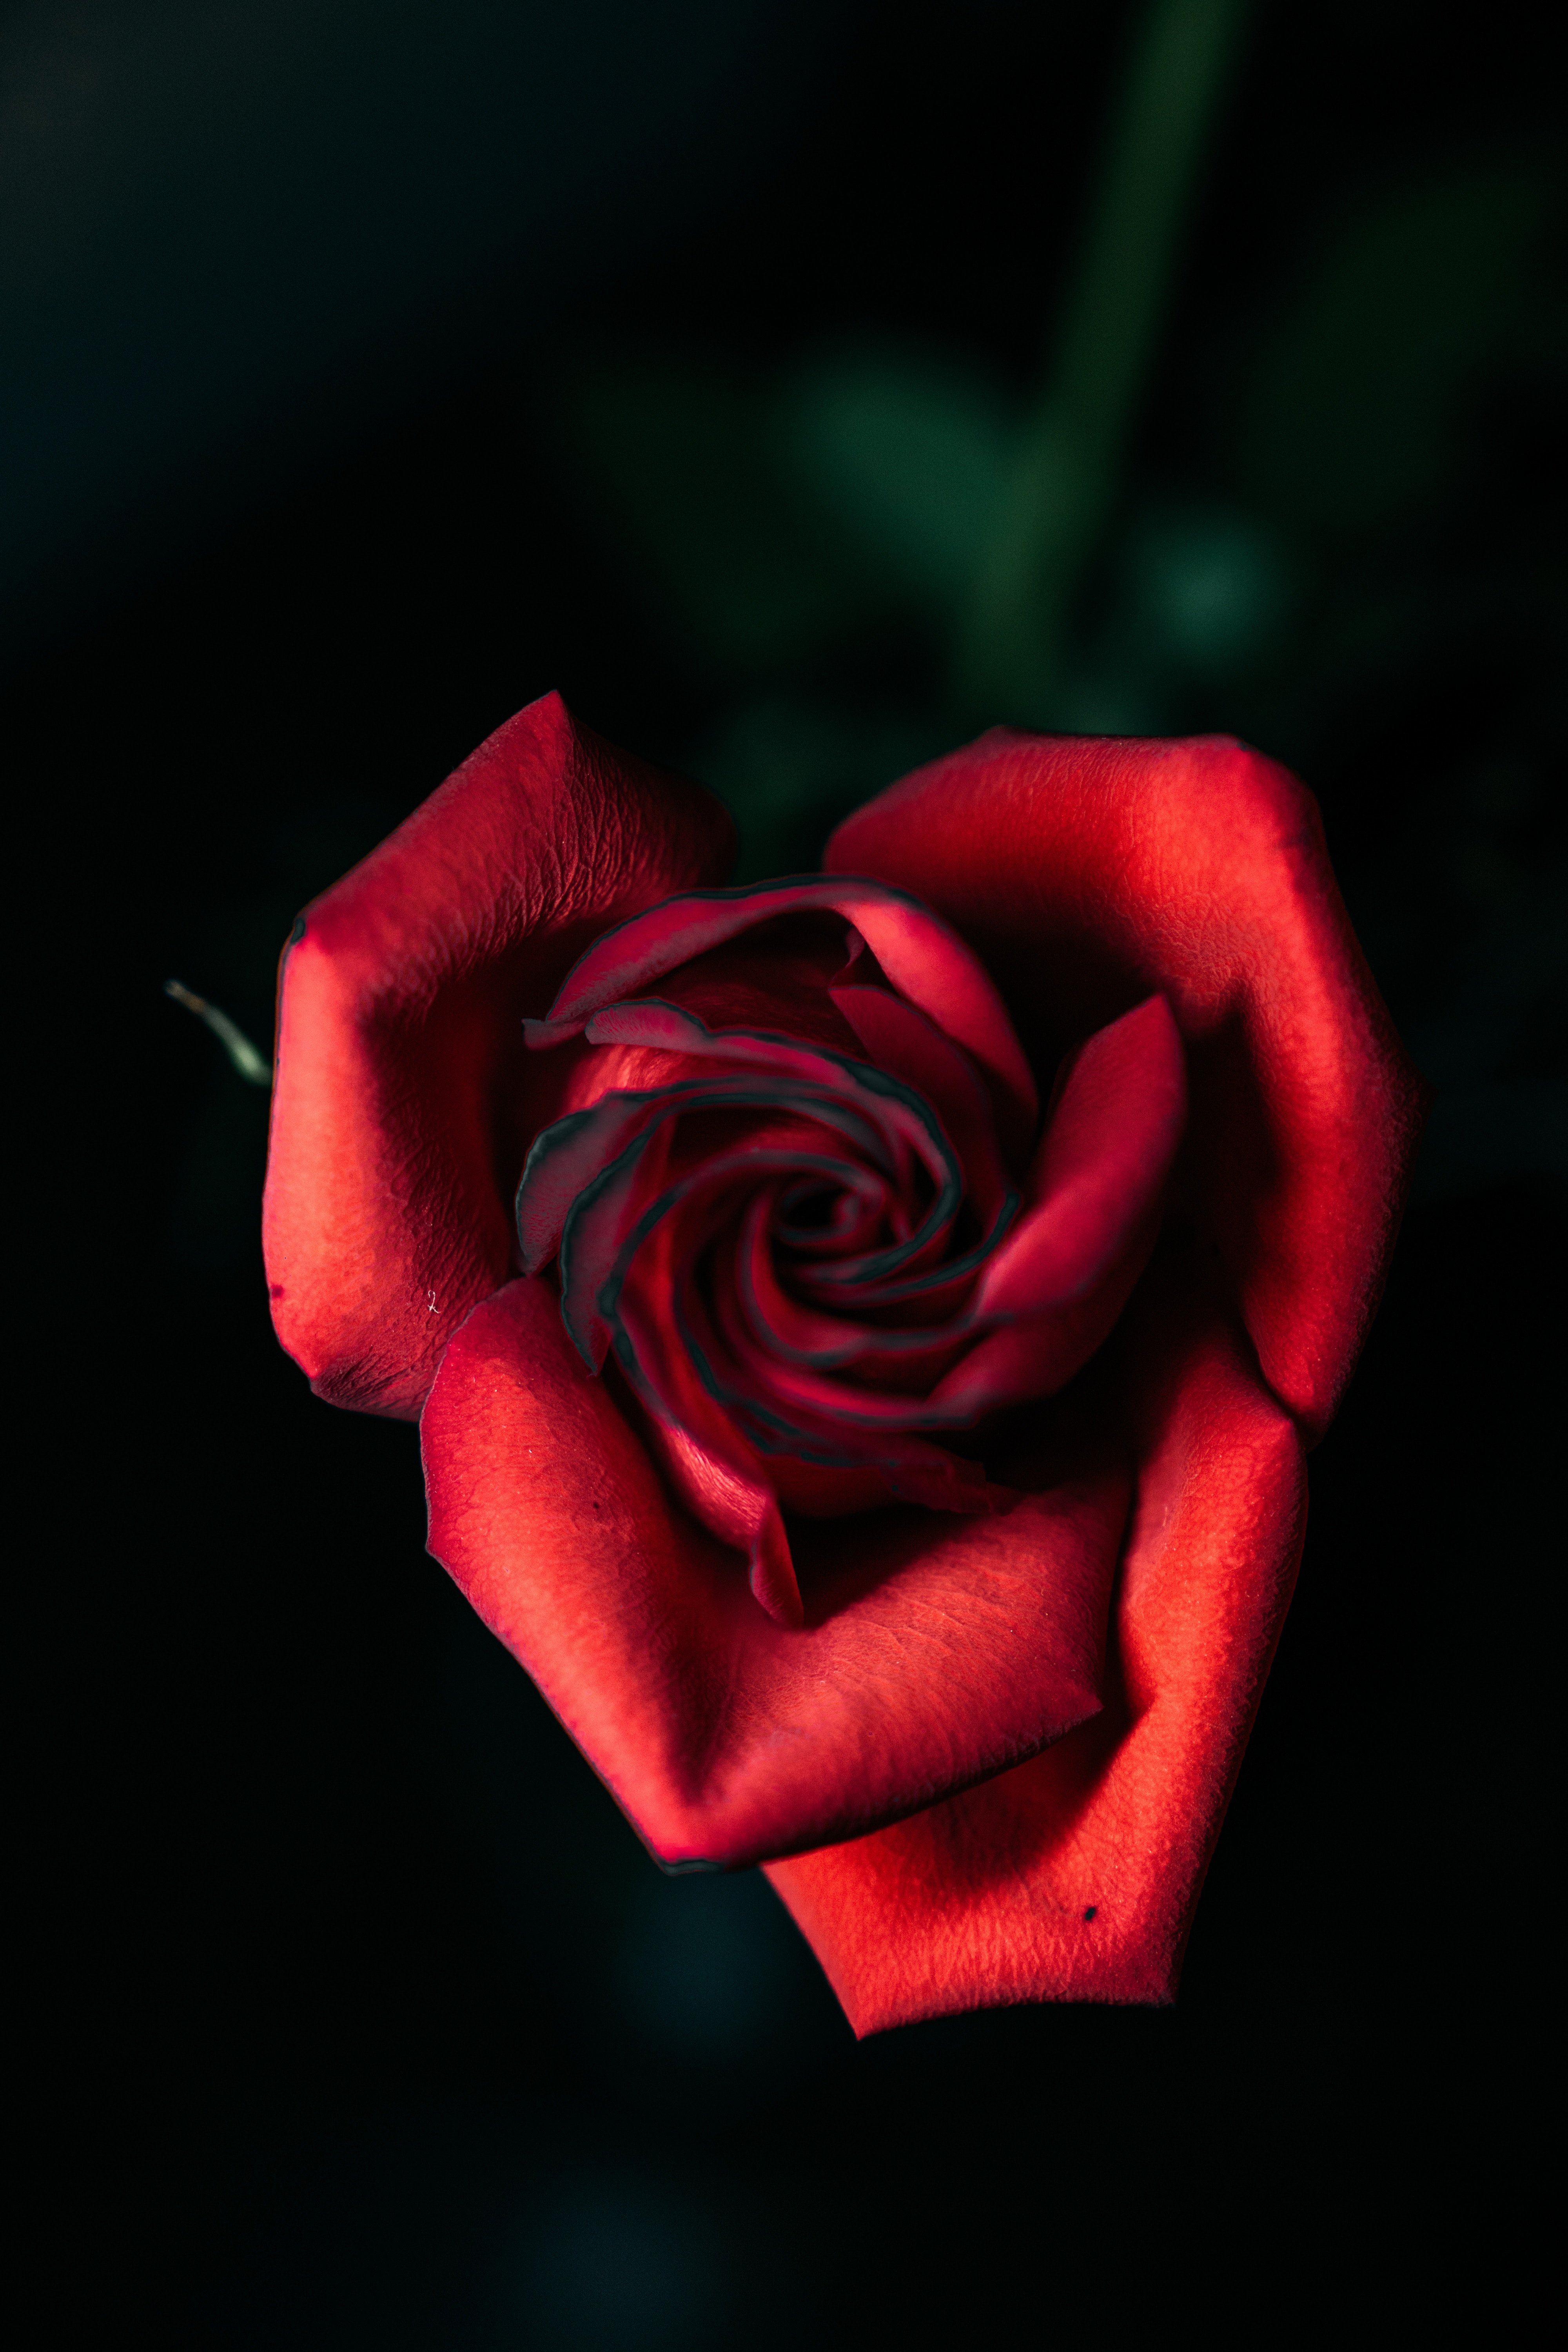 rose, close up, flowers, red, rose flower, petals, bud